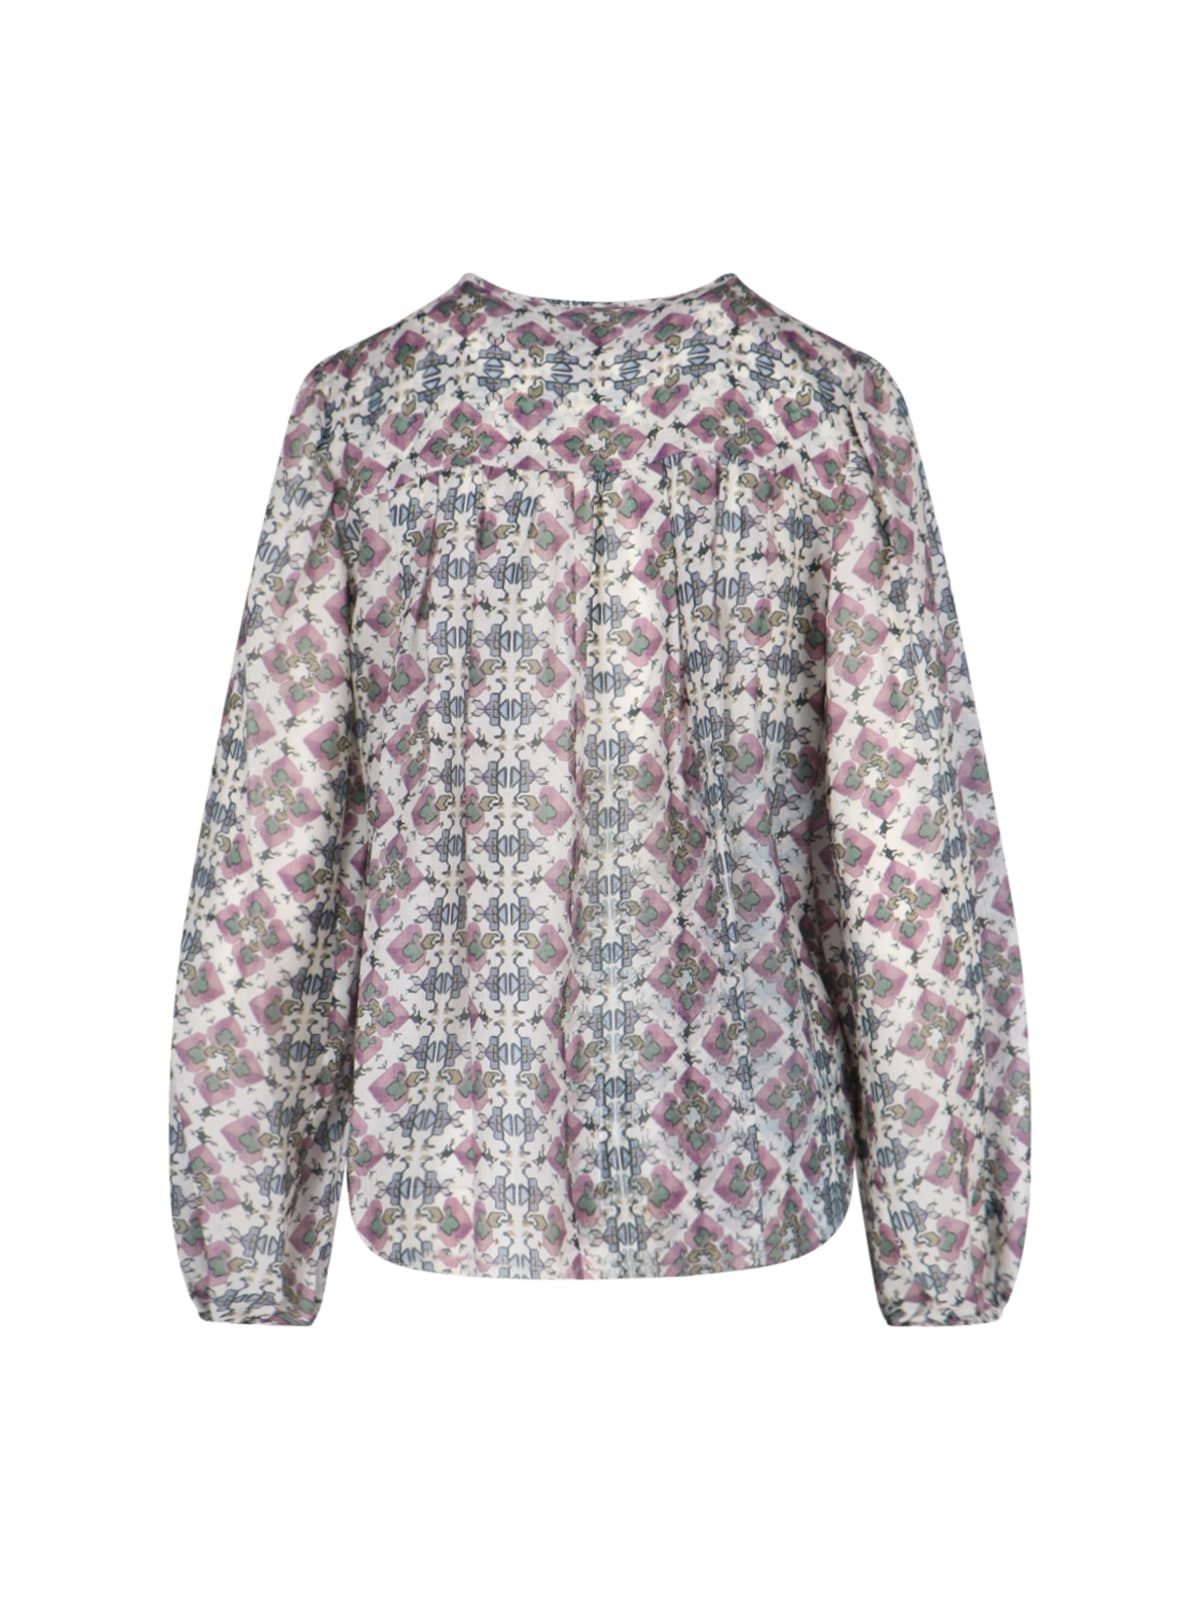 Isabel Marant Floral Printed Shirt In Multi